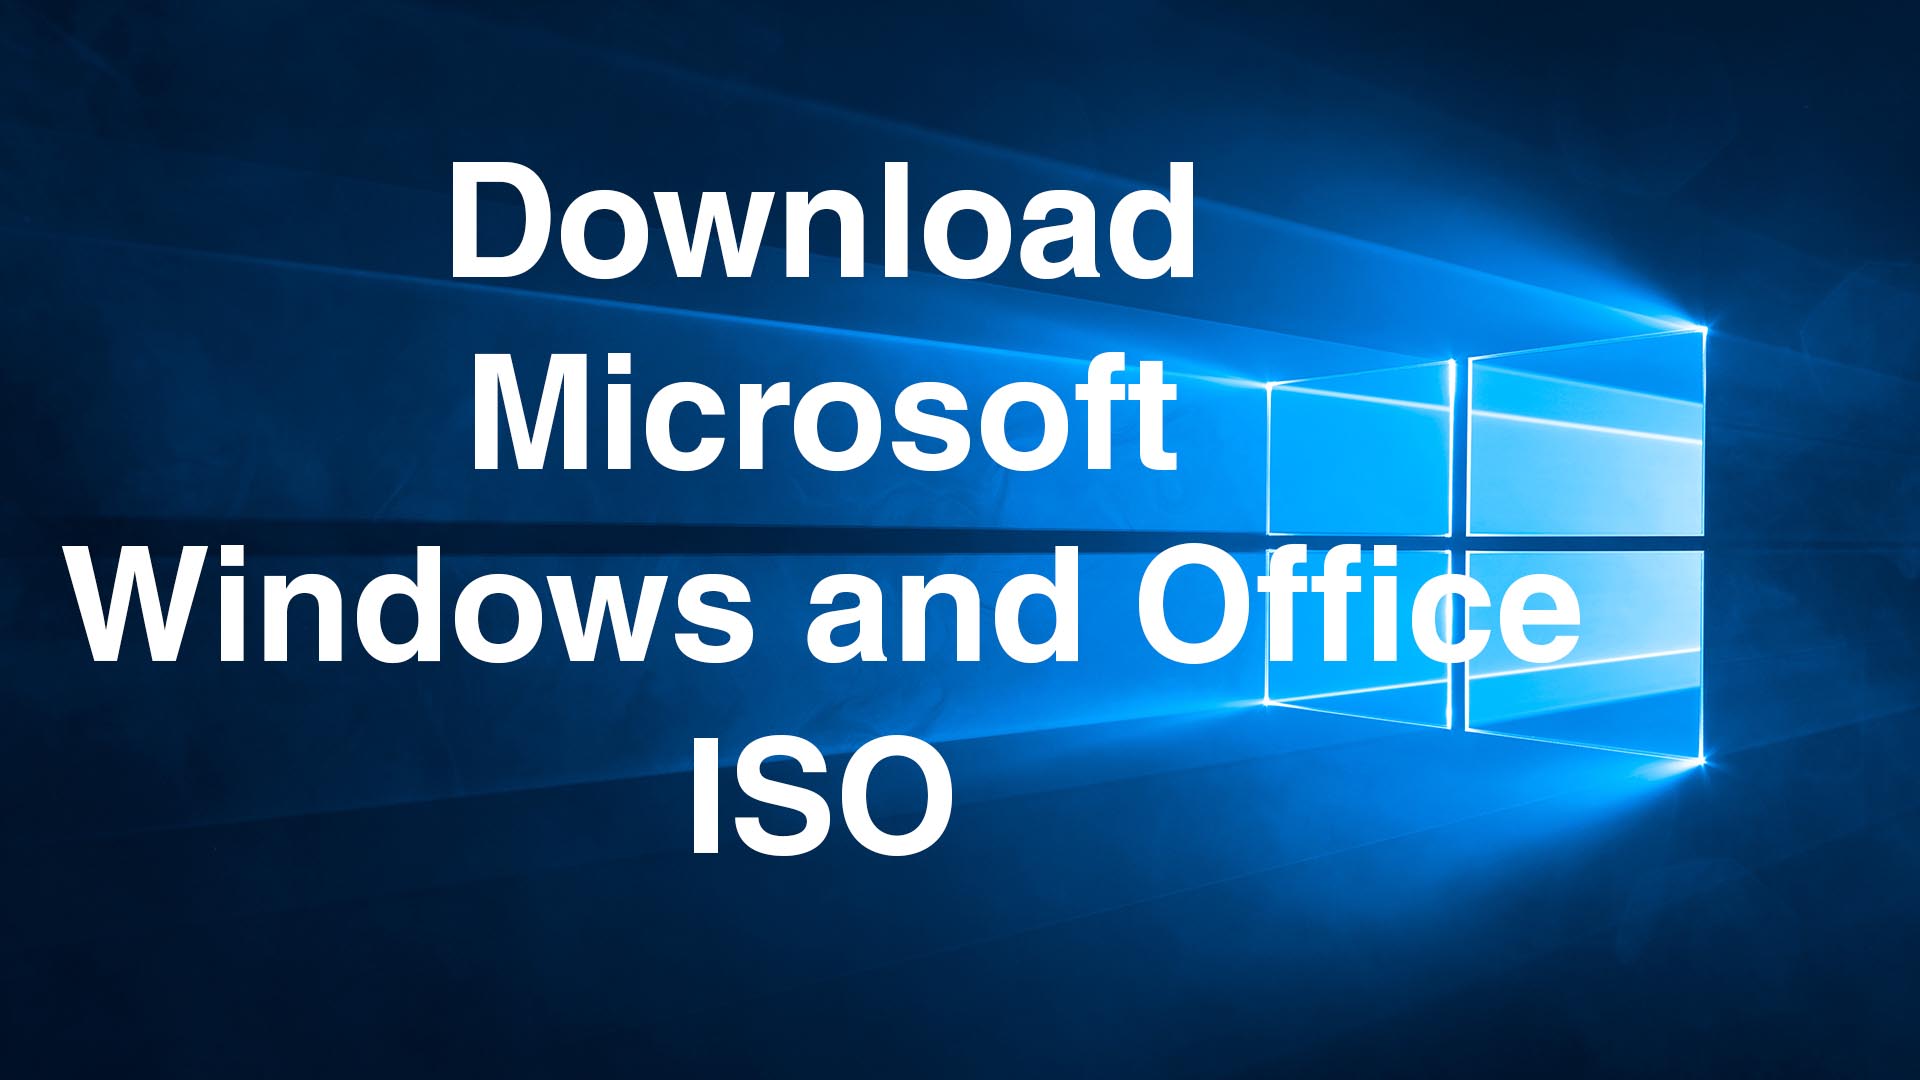 Microsoft Windows 10 Iso Download Address